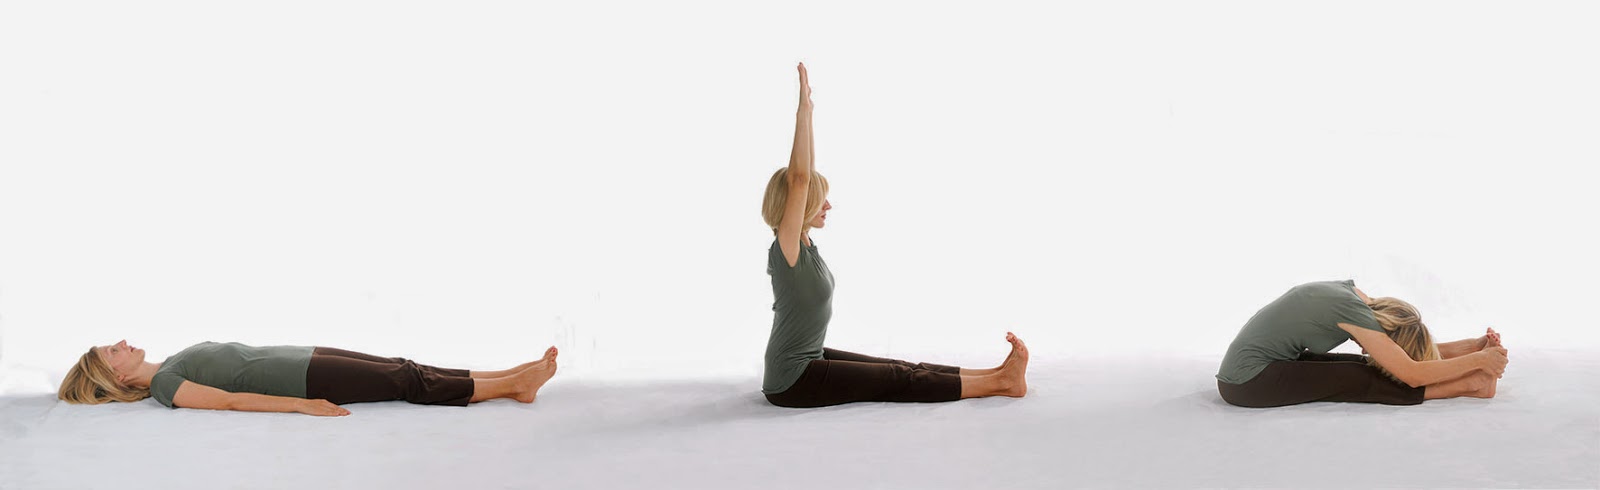 Paschimottanashana Posture and Technique